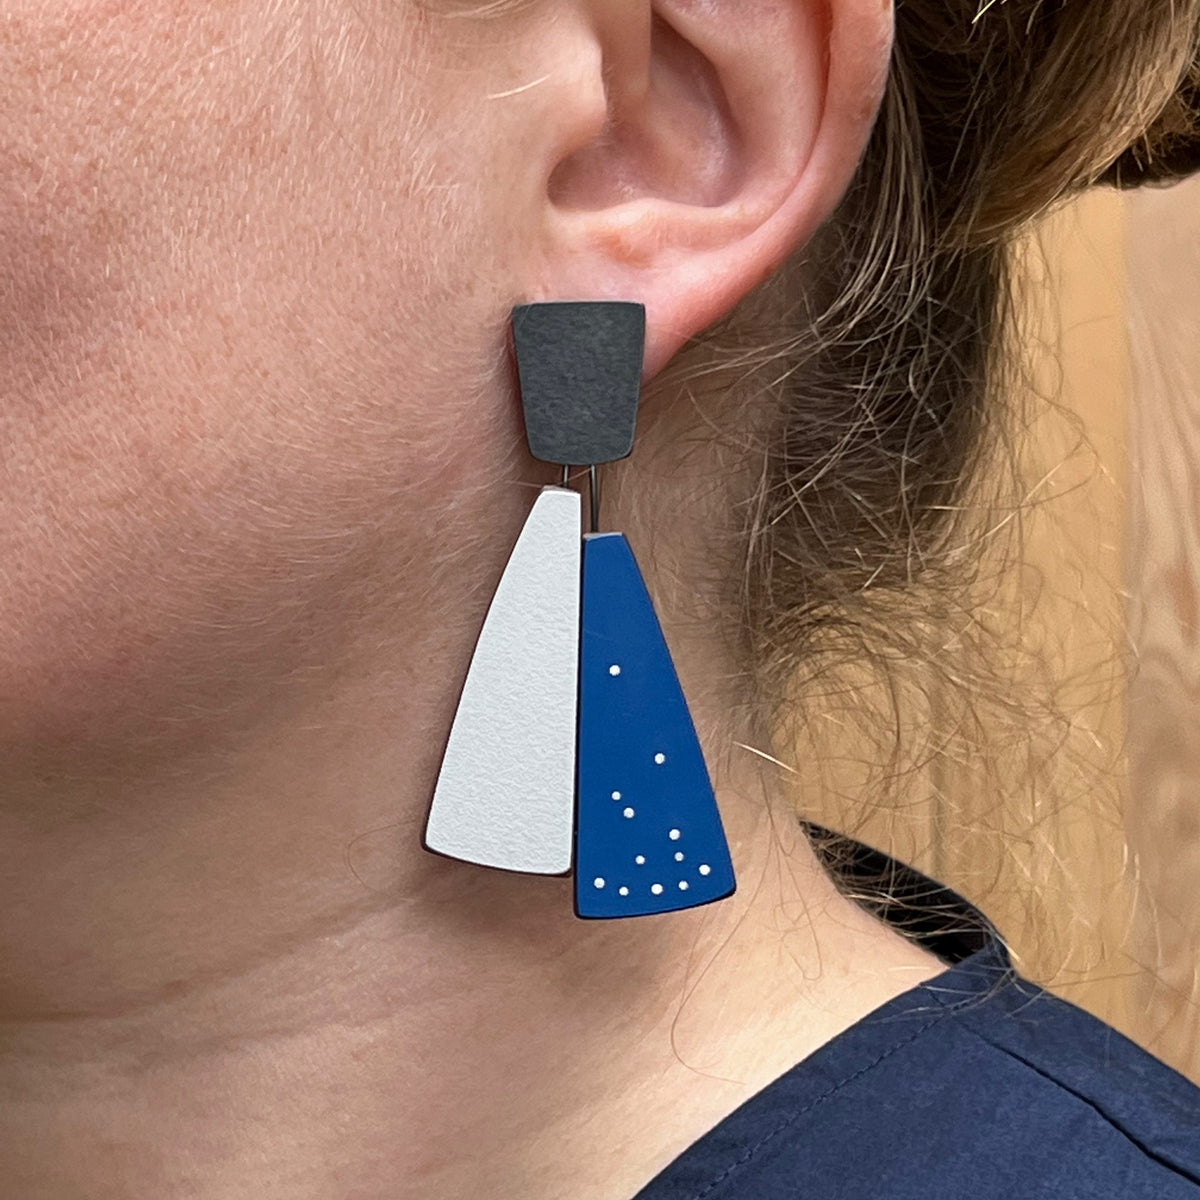 Split wing earrings - teal and light blue